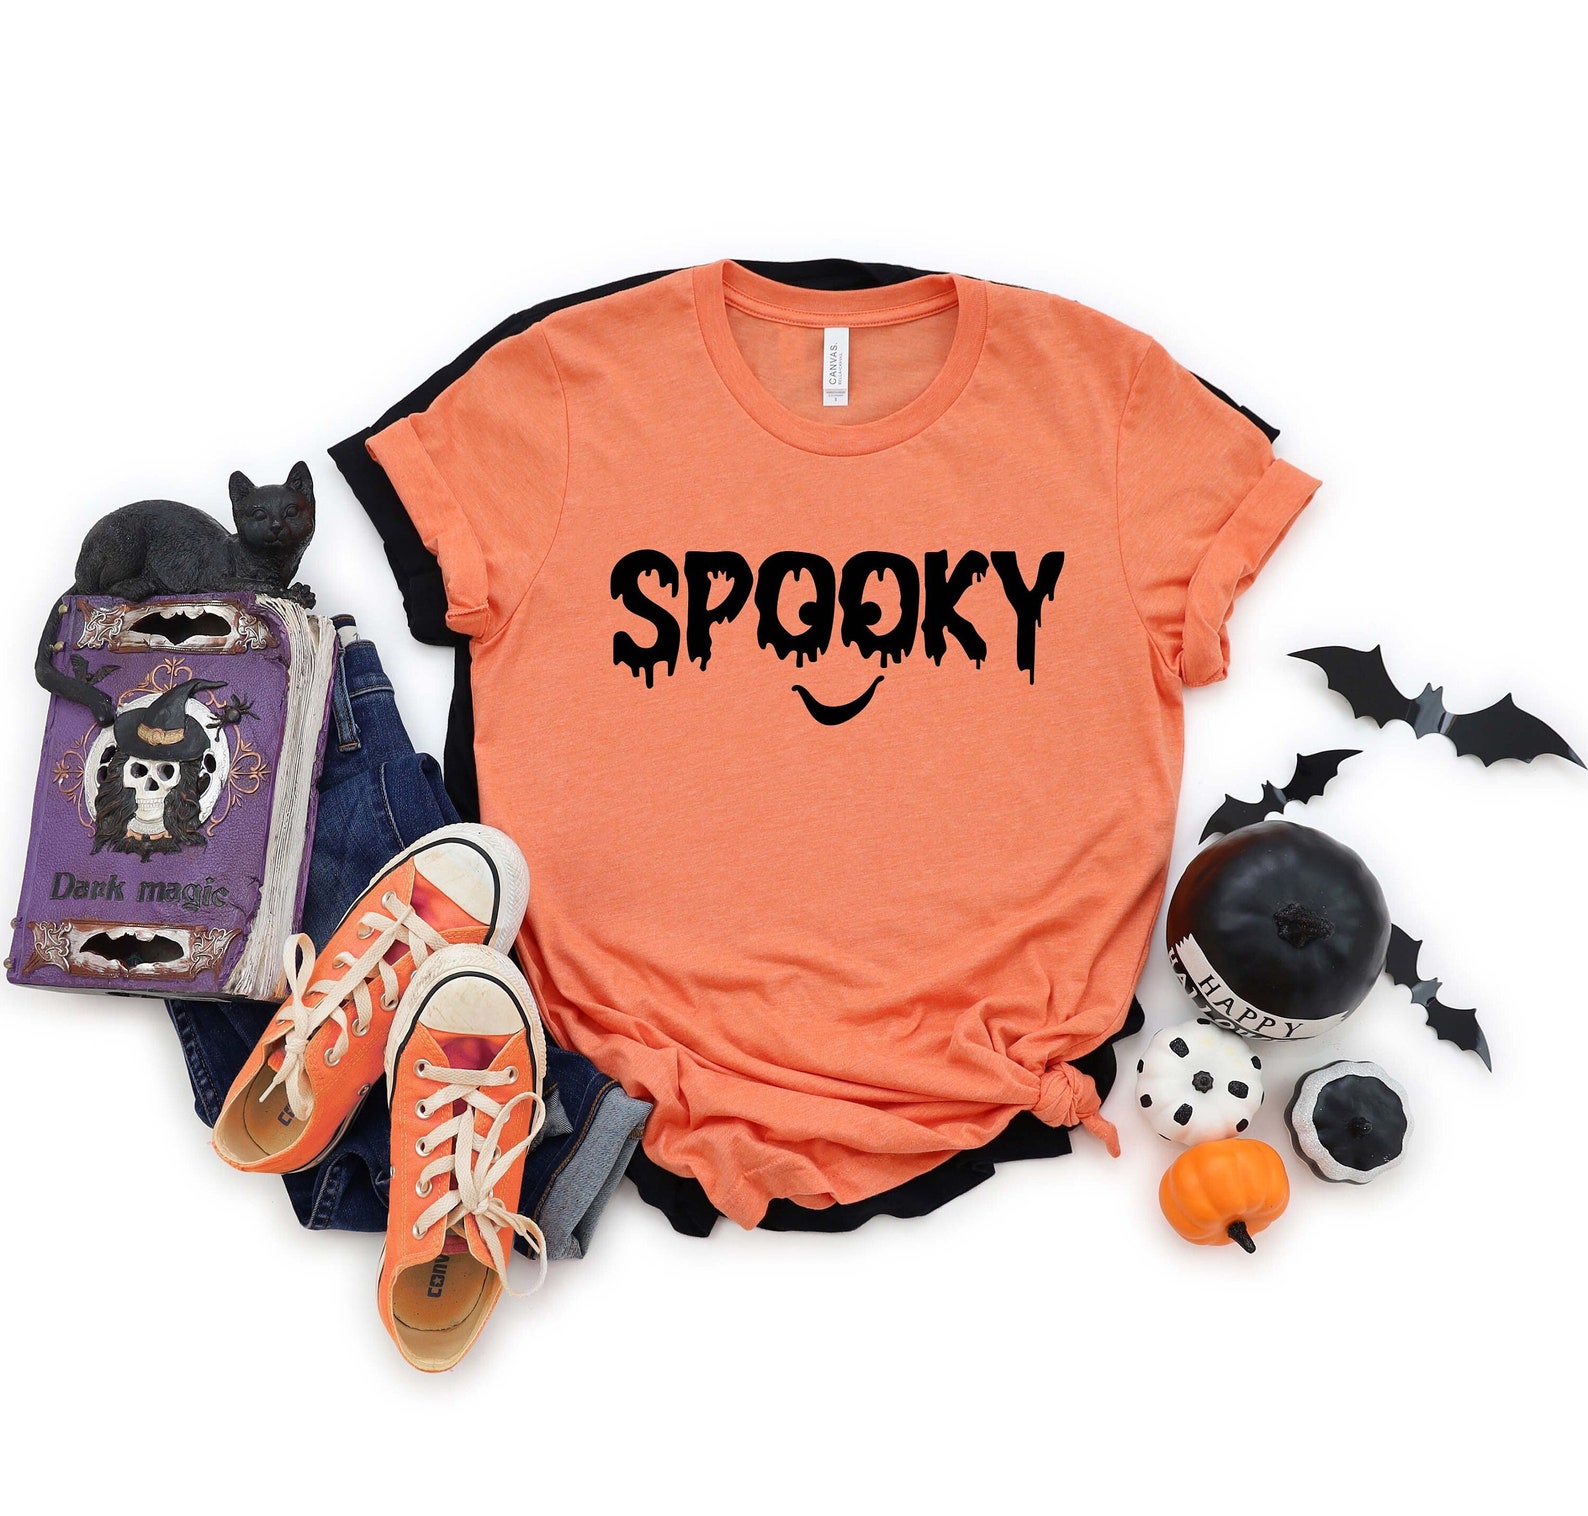 Spooky Halloween Shirt Spooky Shirt Halloween Shirt - Etsy